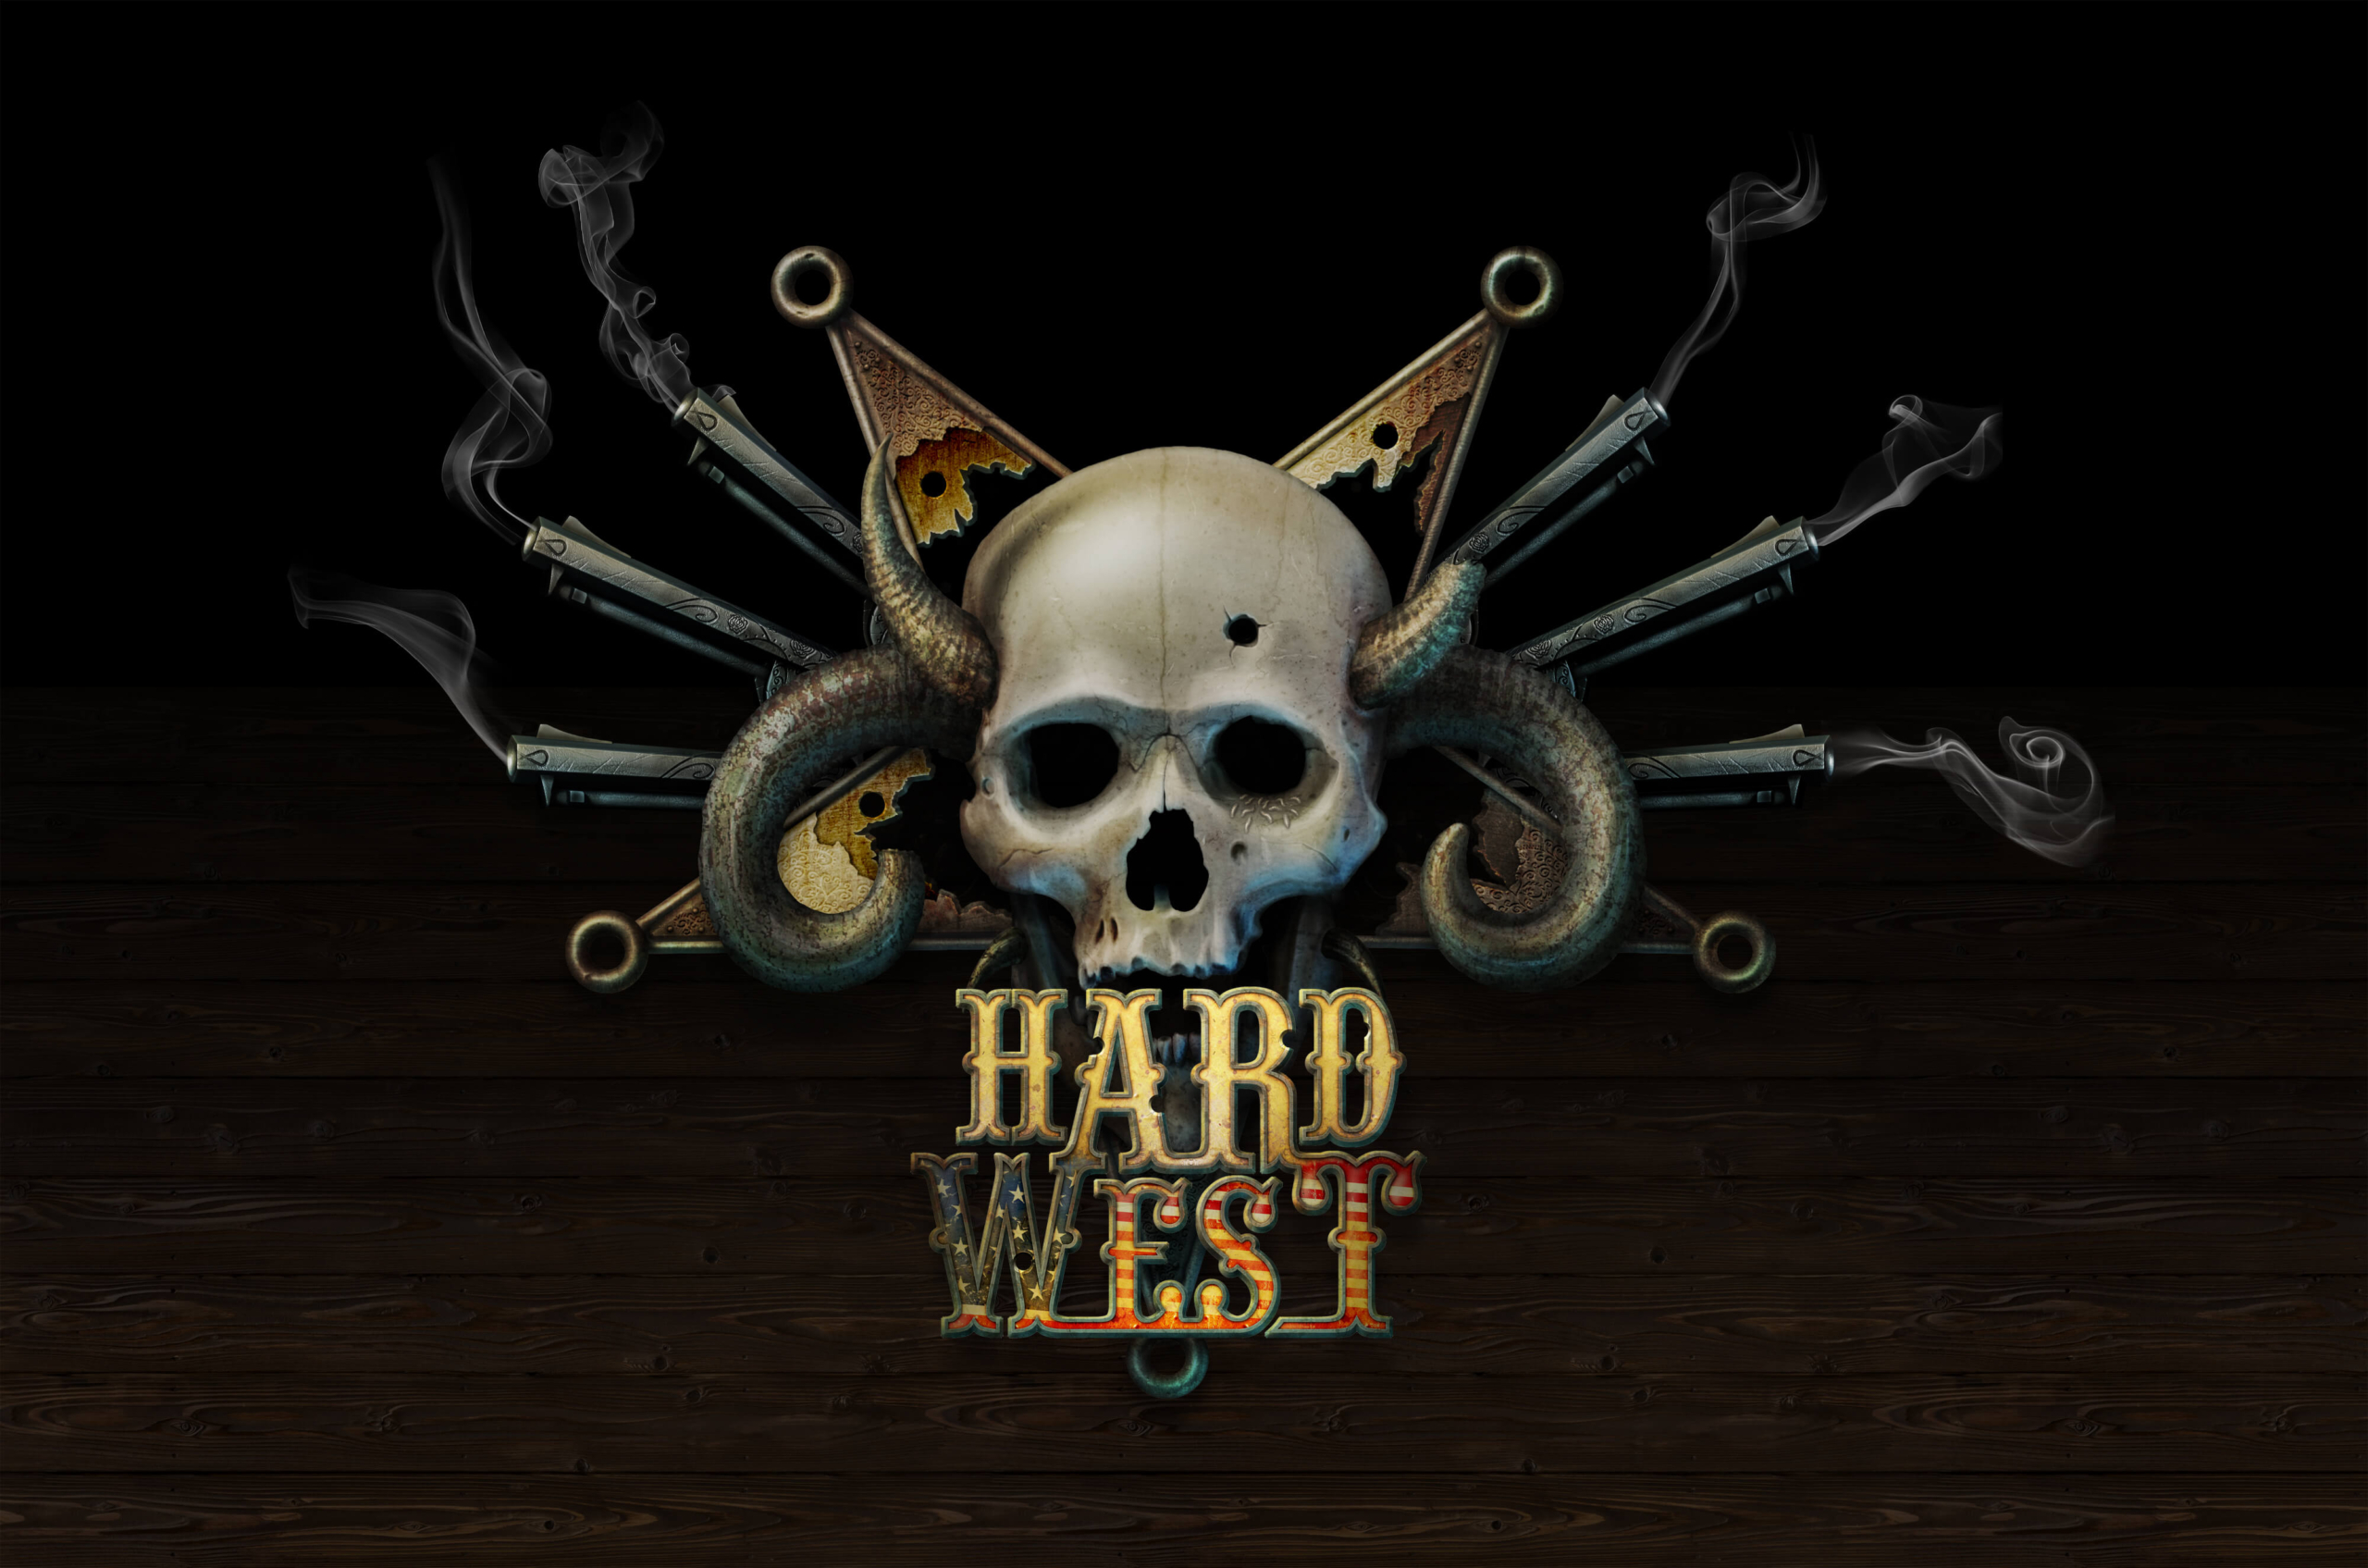 Hard west steam фото 116